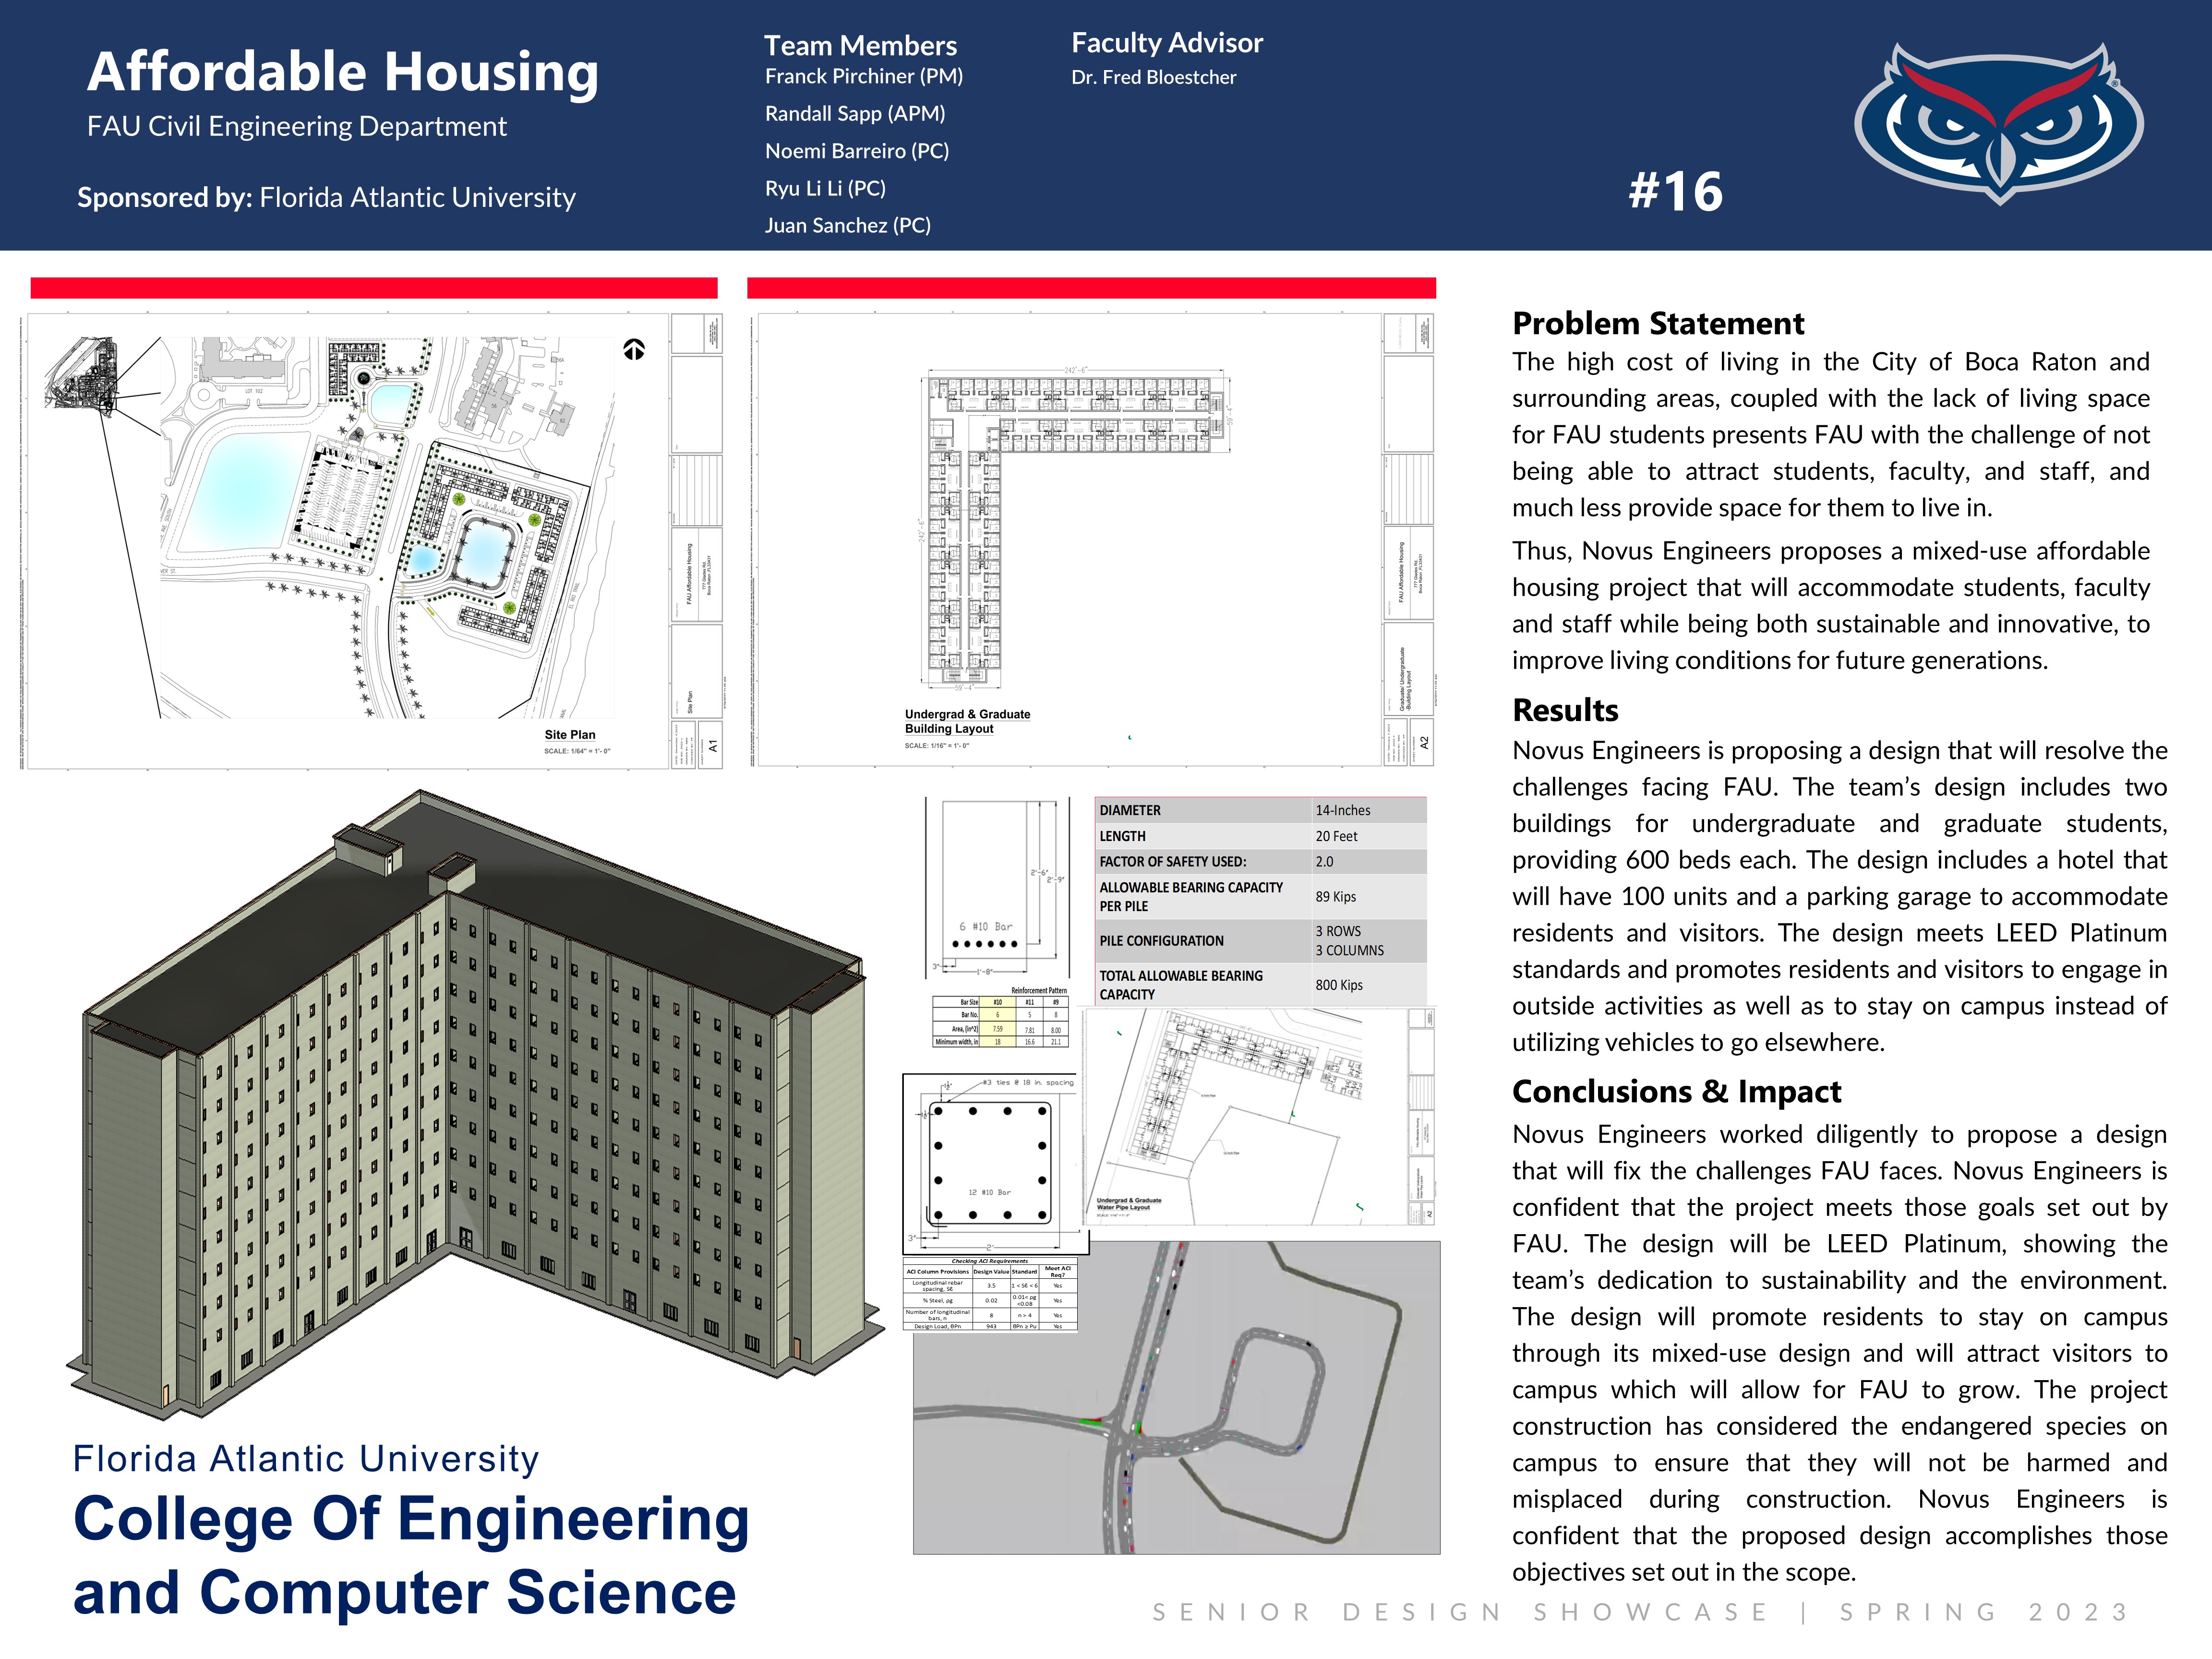 Affordable Housing at Florida Atlantic University (Novus Engineering)